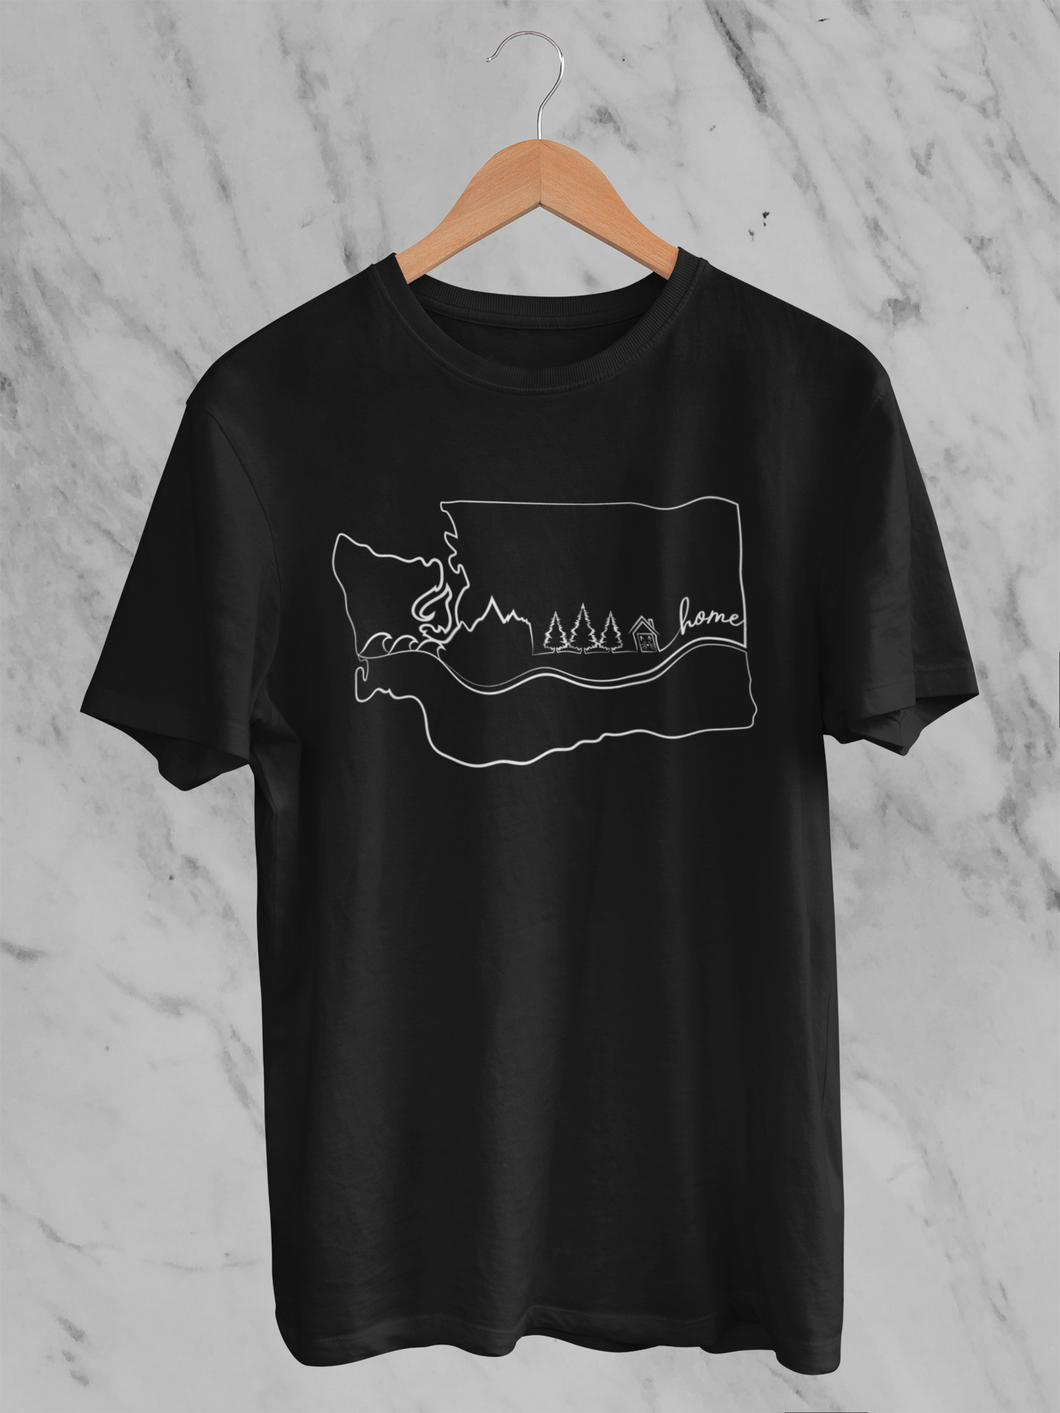 WA is Home- Cat Version- Men's/Unisex or Women's T-shirt